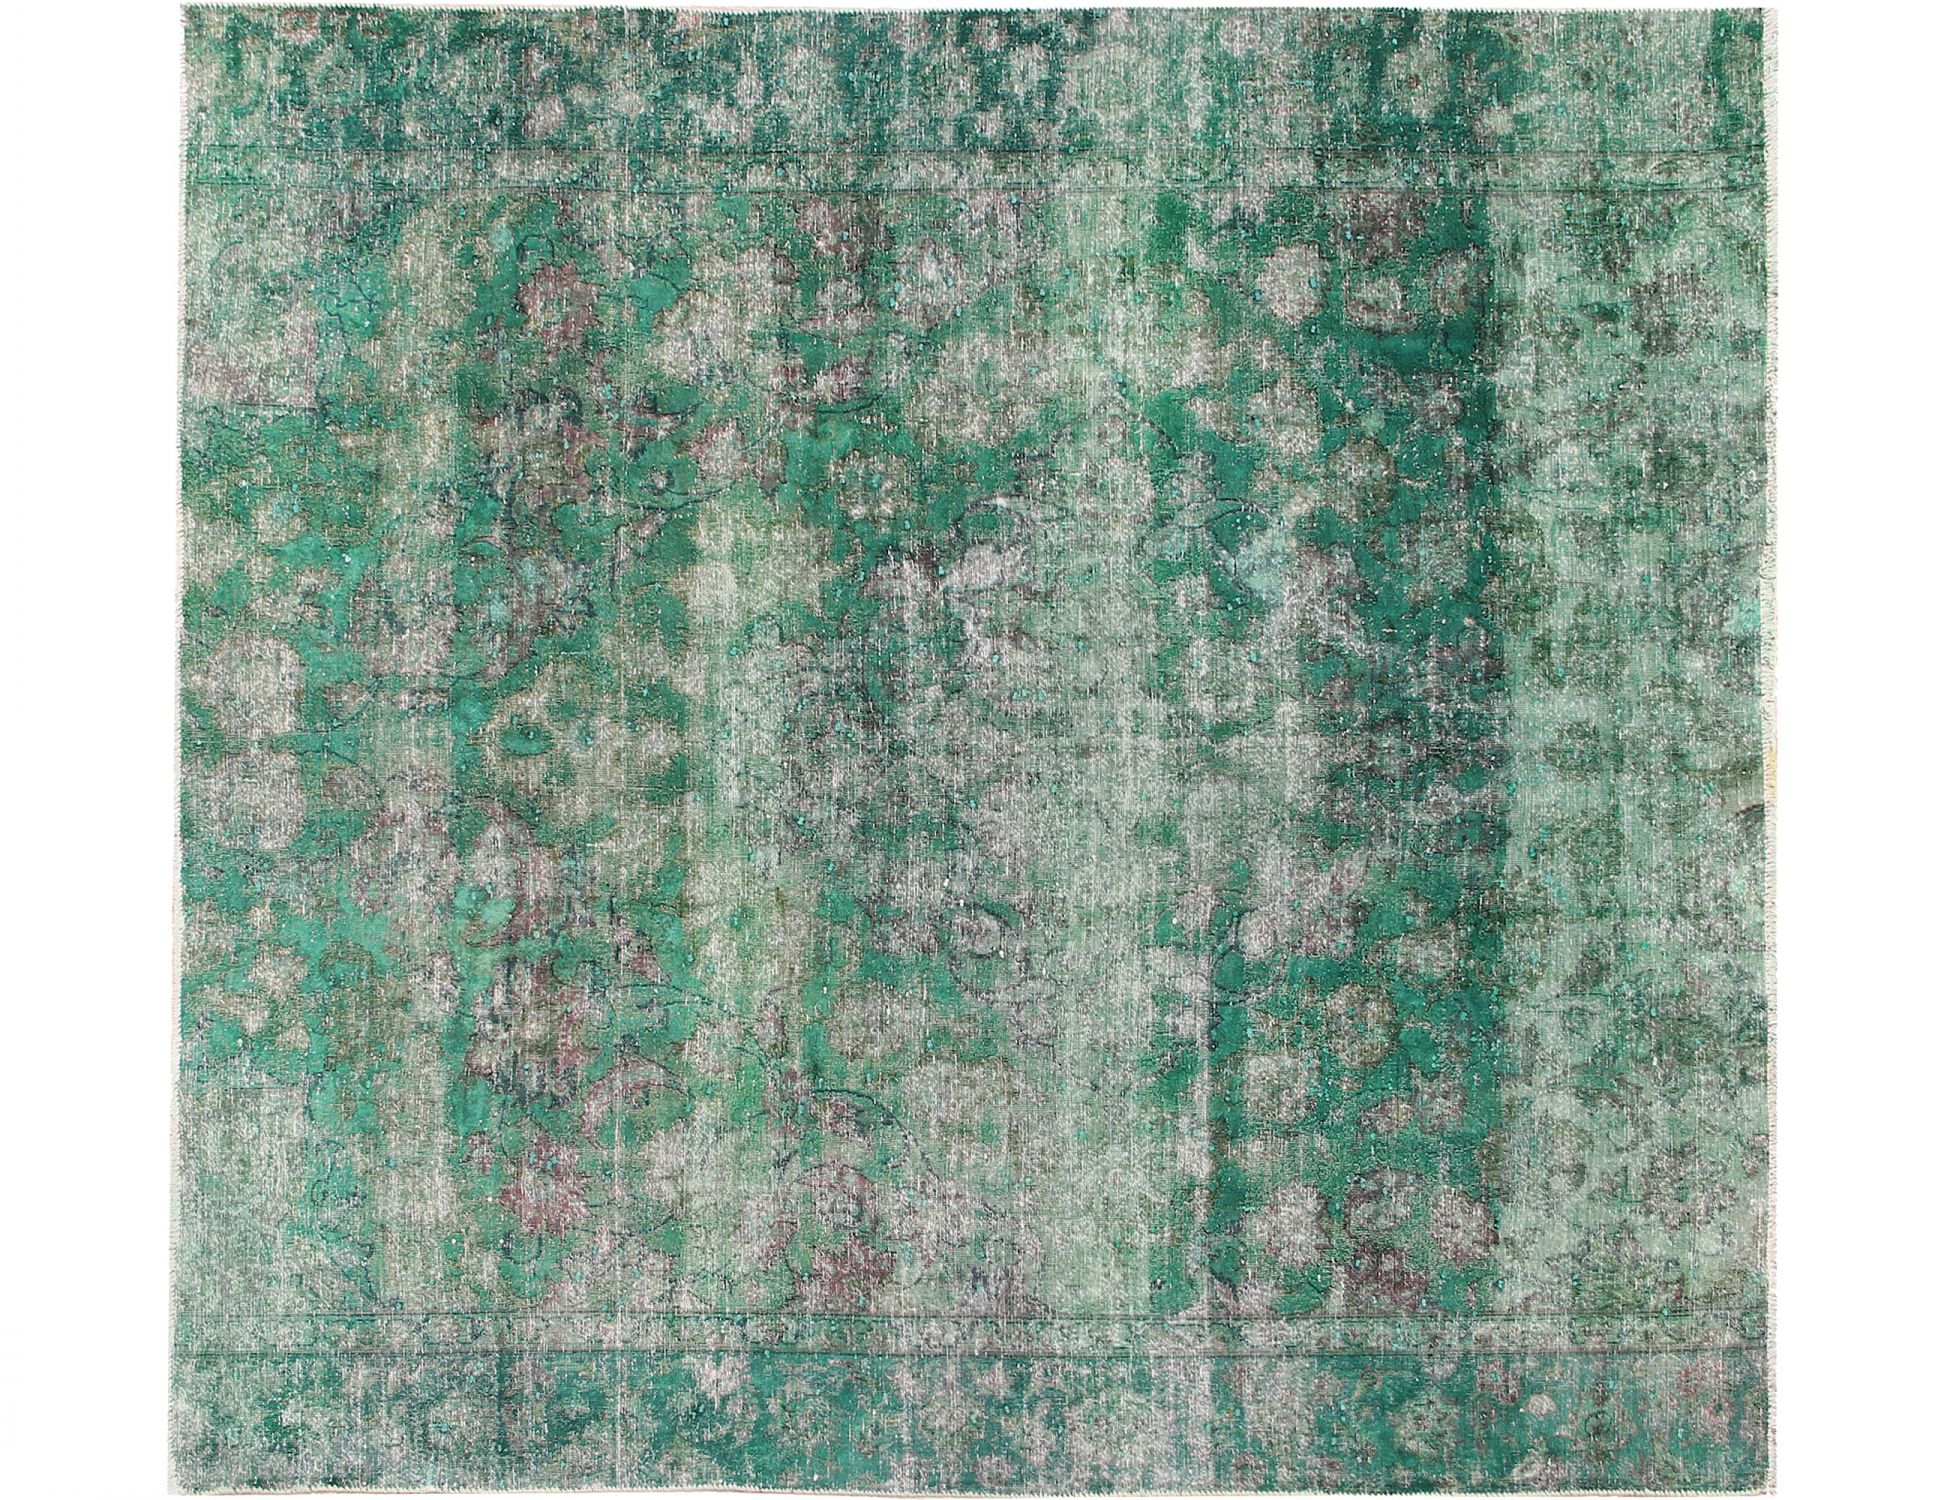 Quadrat  vintage teppich  grün <br/>220 x 205 cm